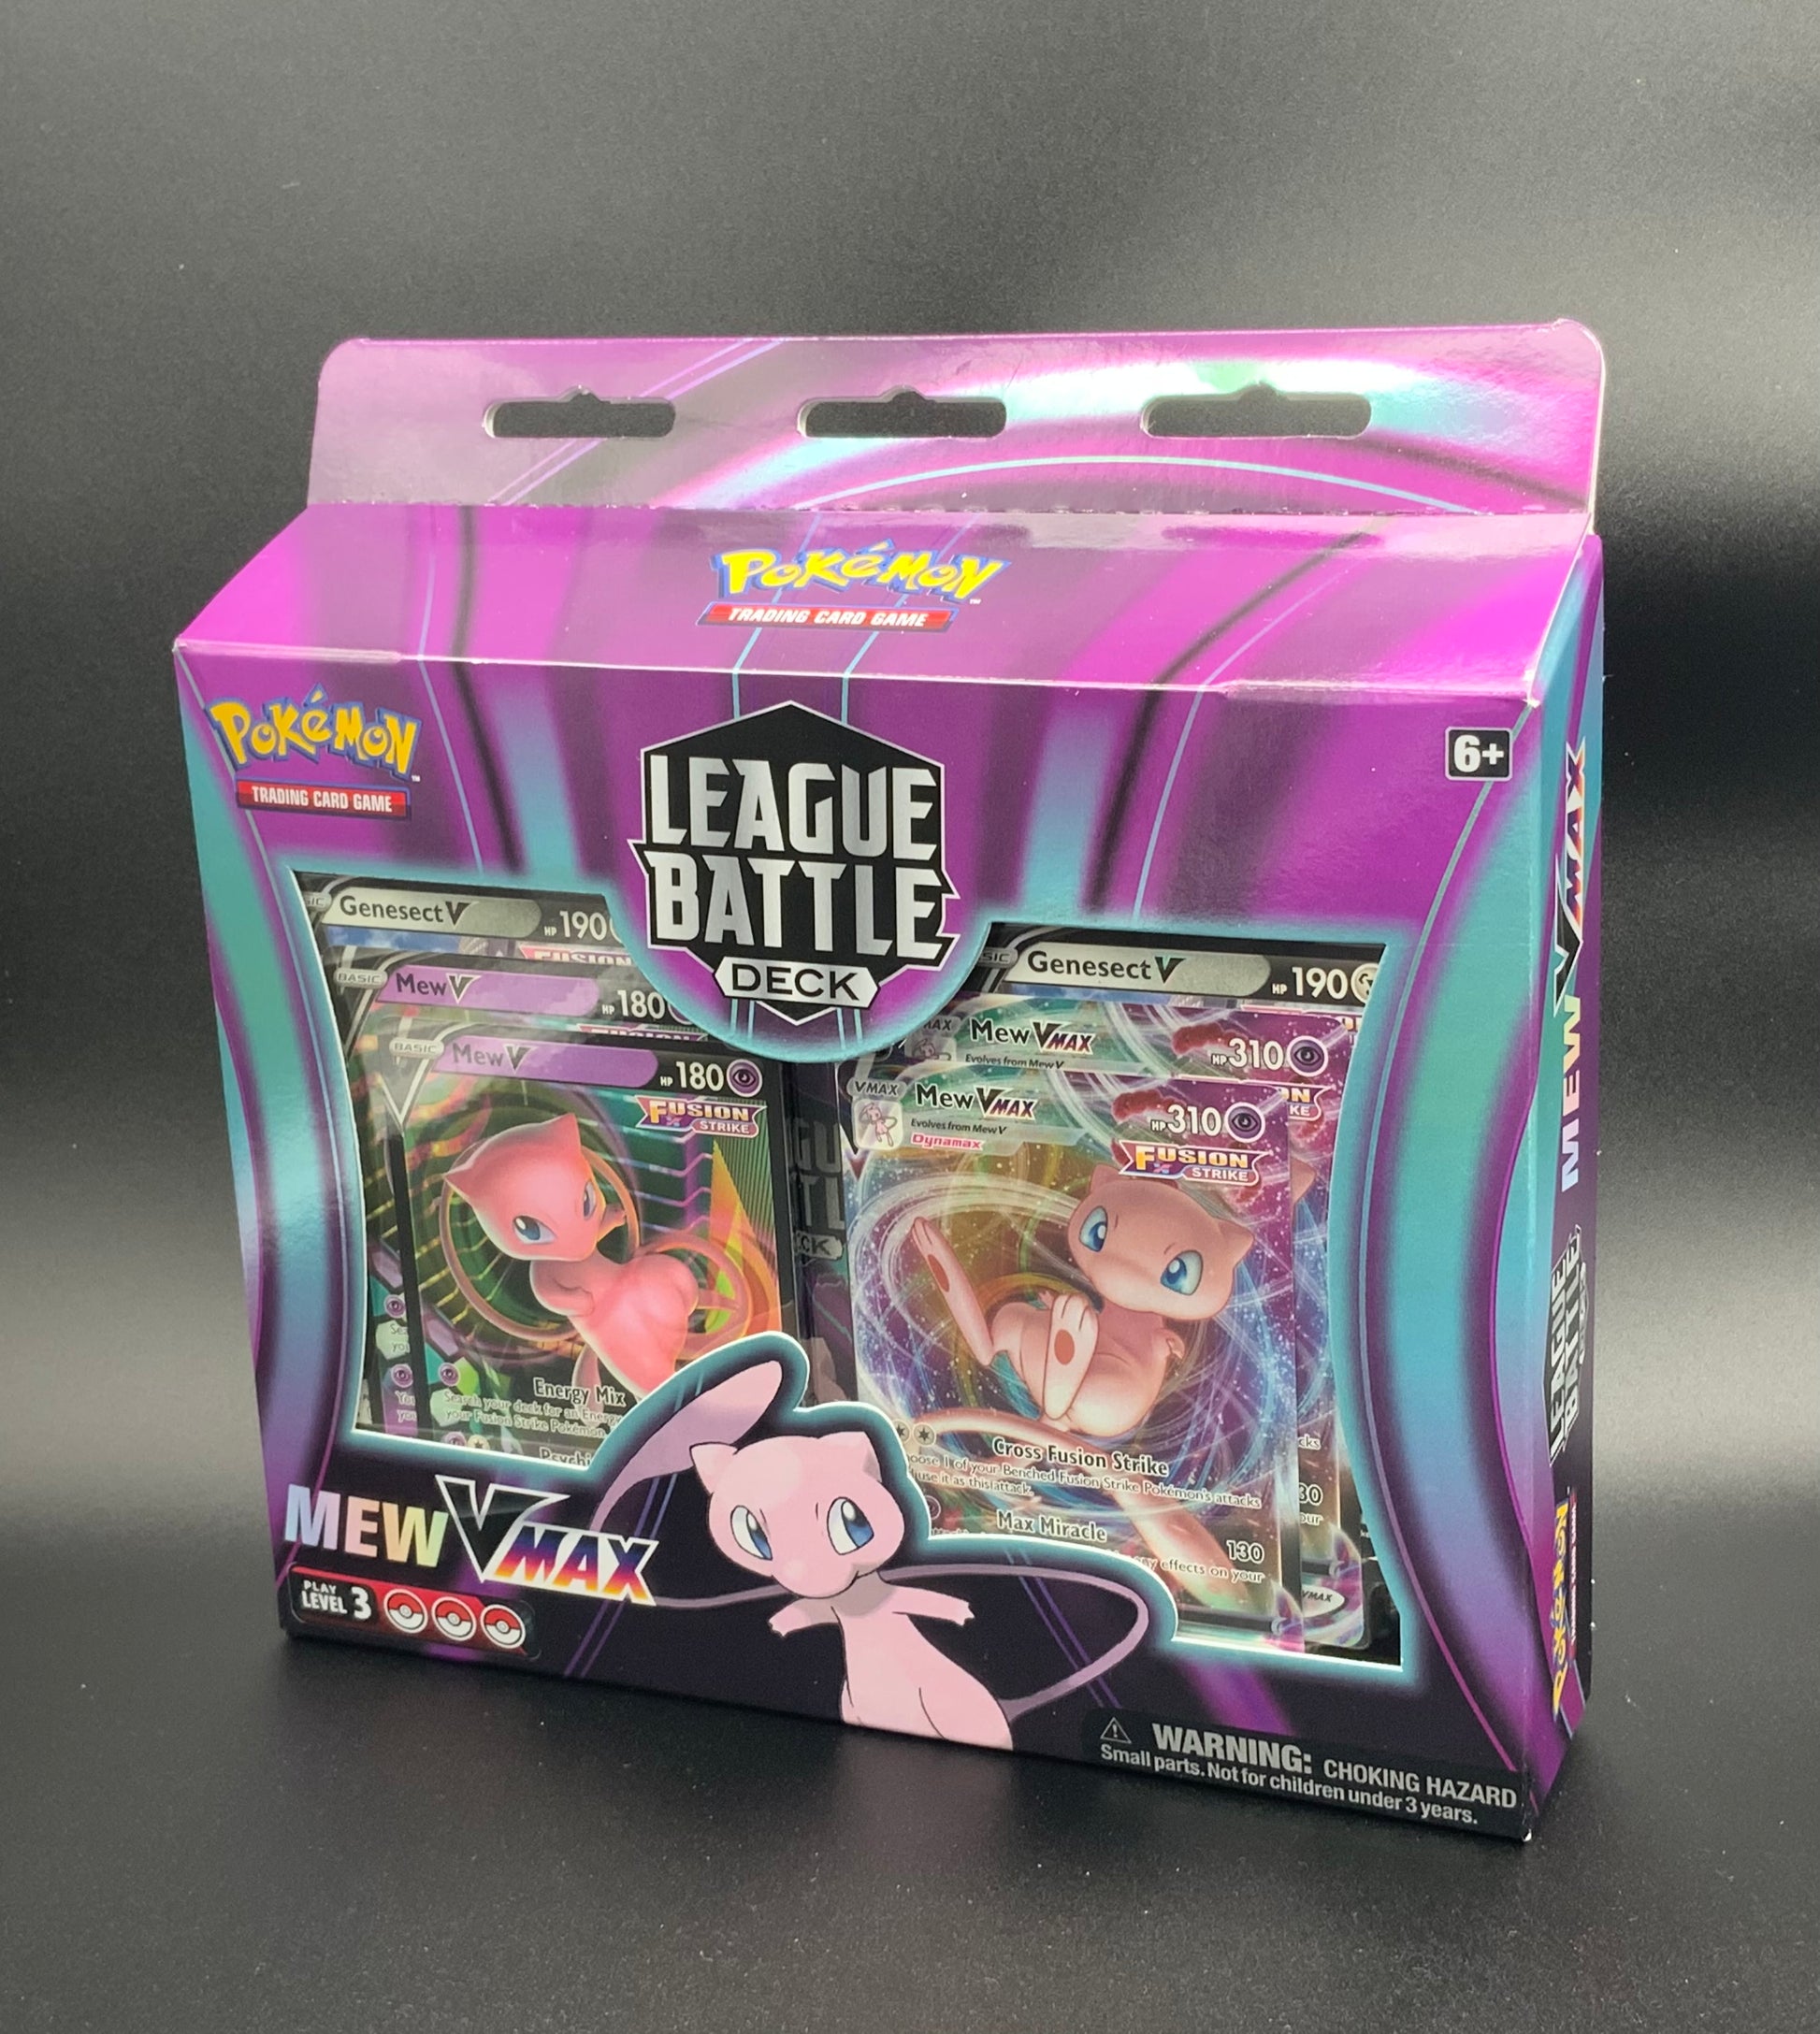 Pokemon TCG: Mew VMAX League Battle Deck